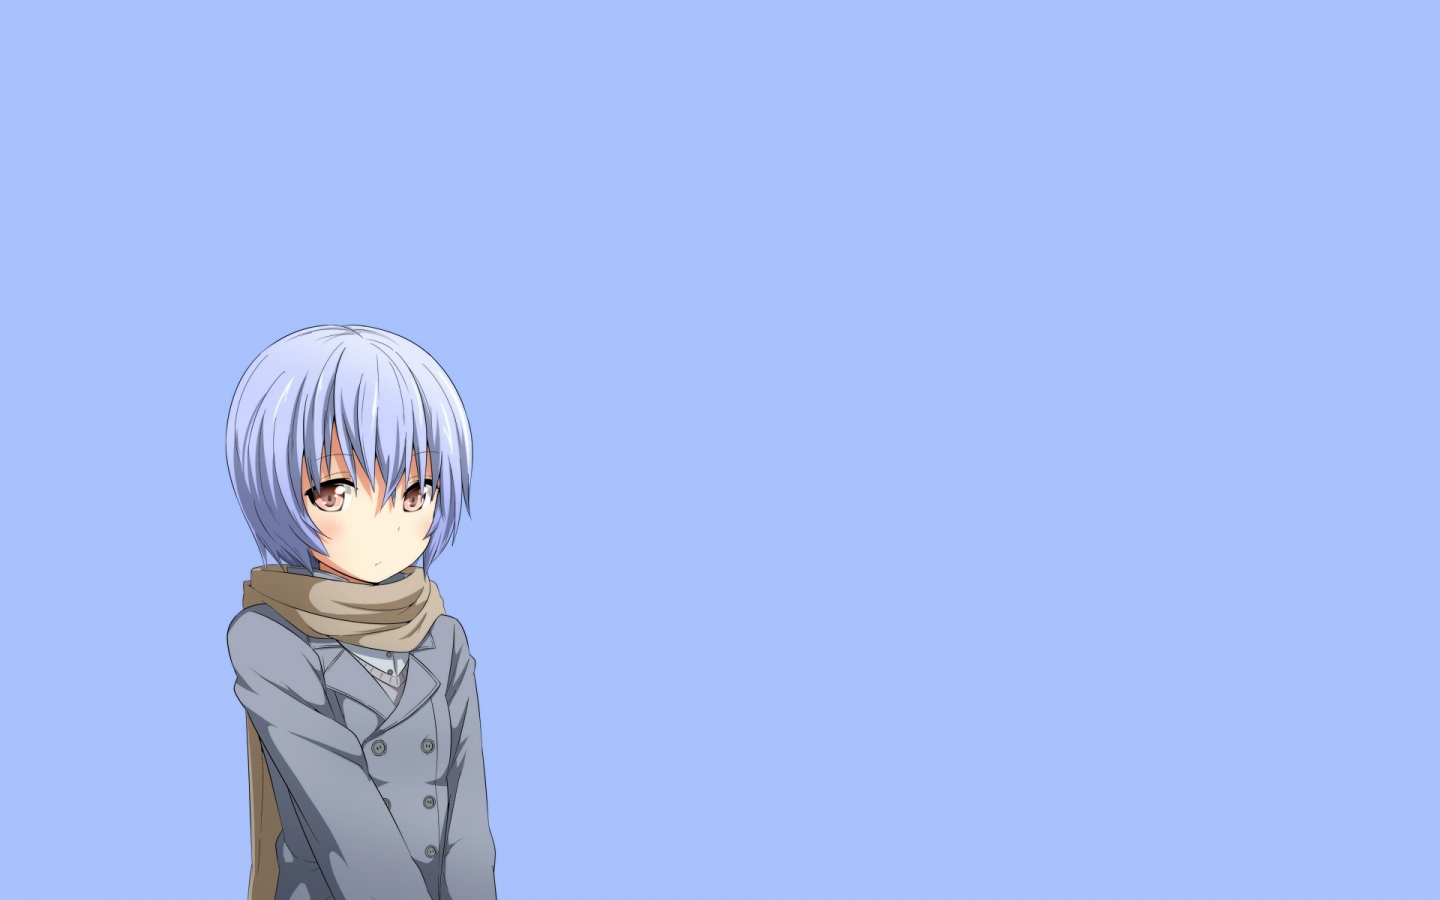 blue background, scarfs, синий фон, Ayanami Rei, простой фон, шарфы, simple background, Neon Genesis Evangelion